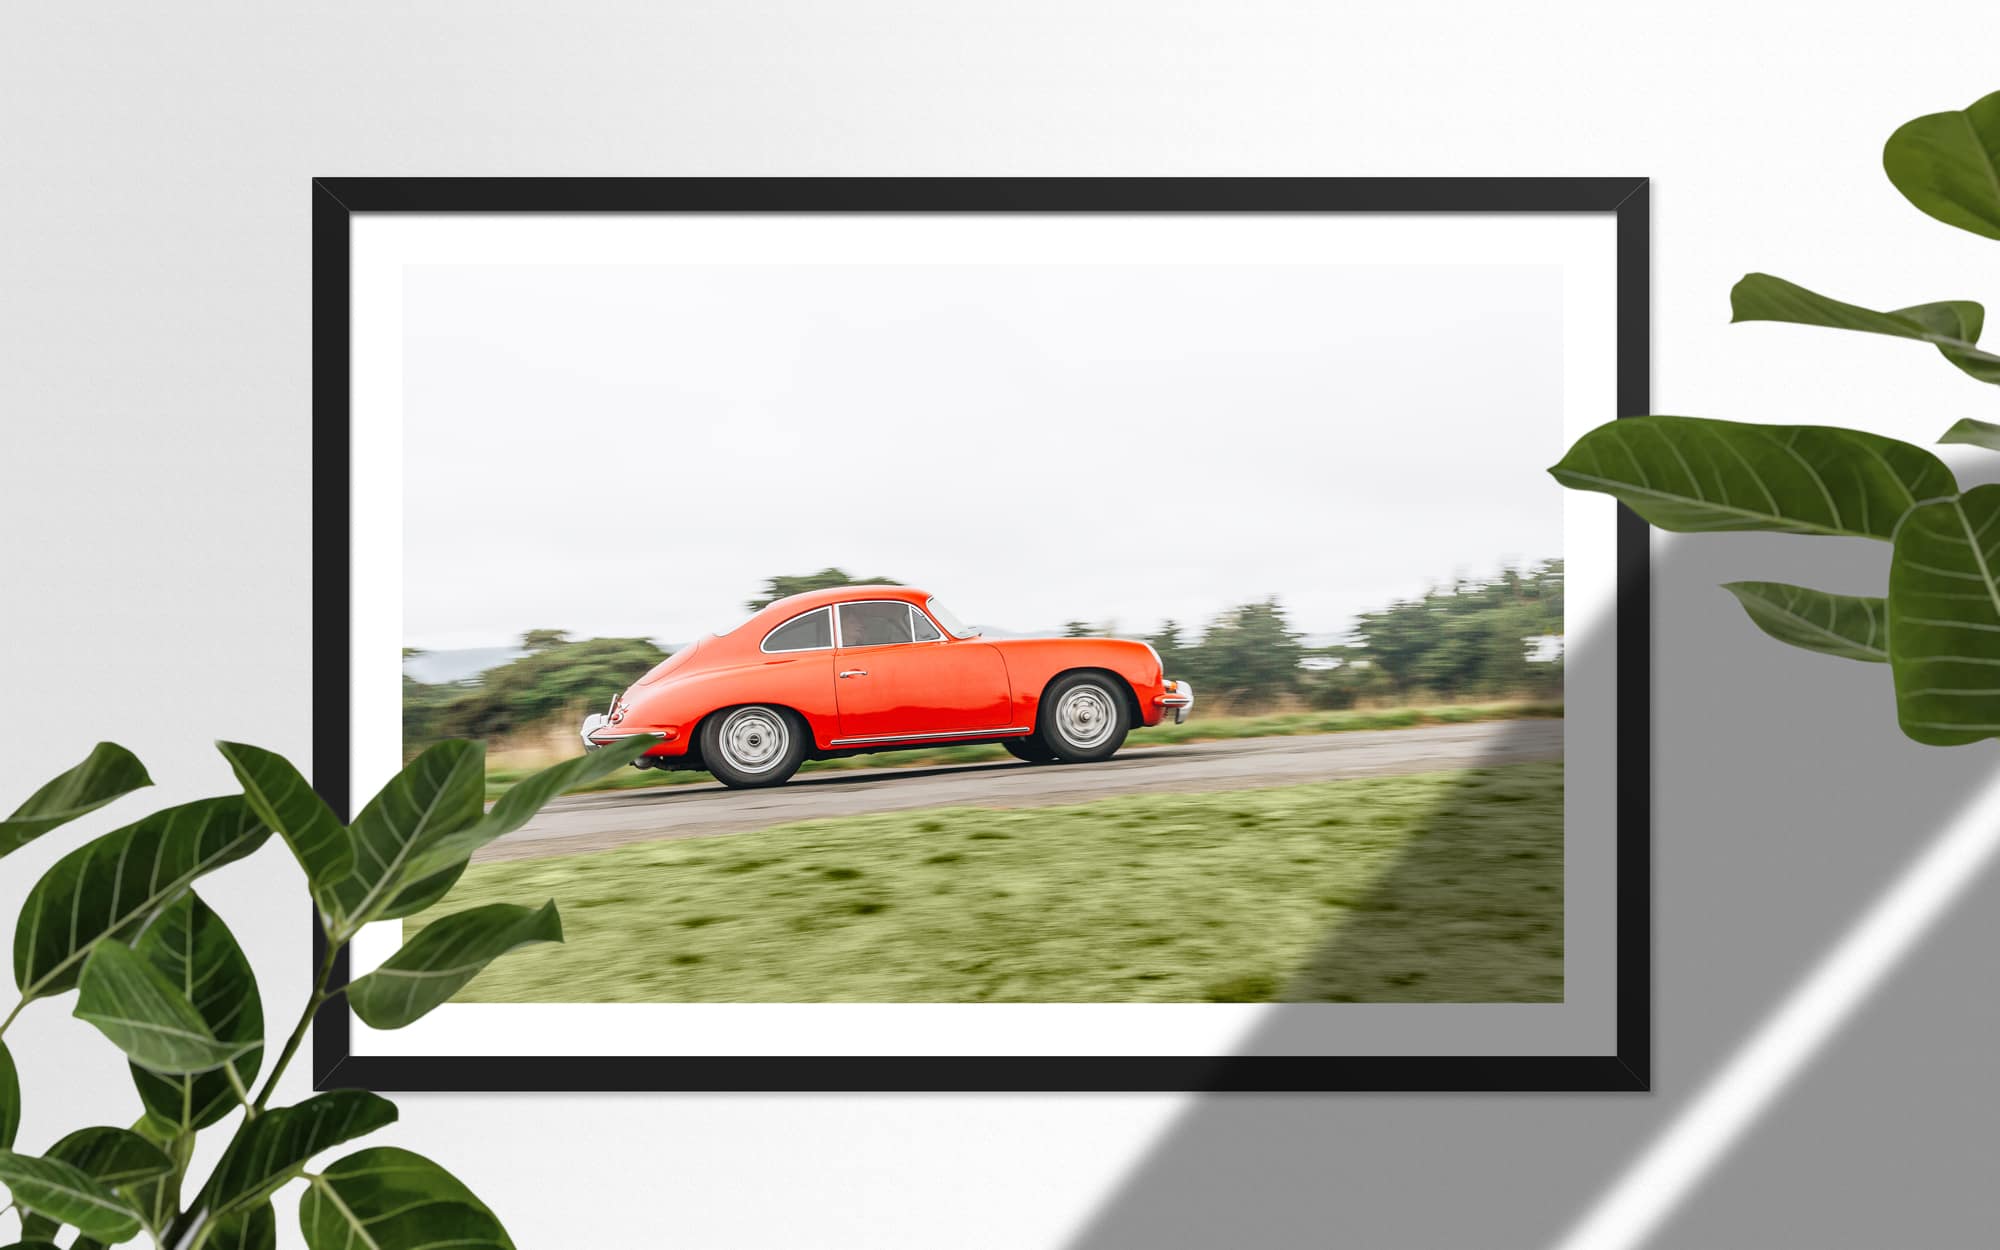 Porsche 356, Car prints, huseyin erturk